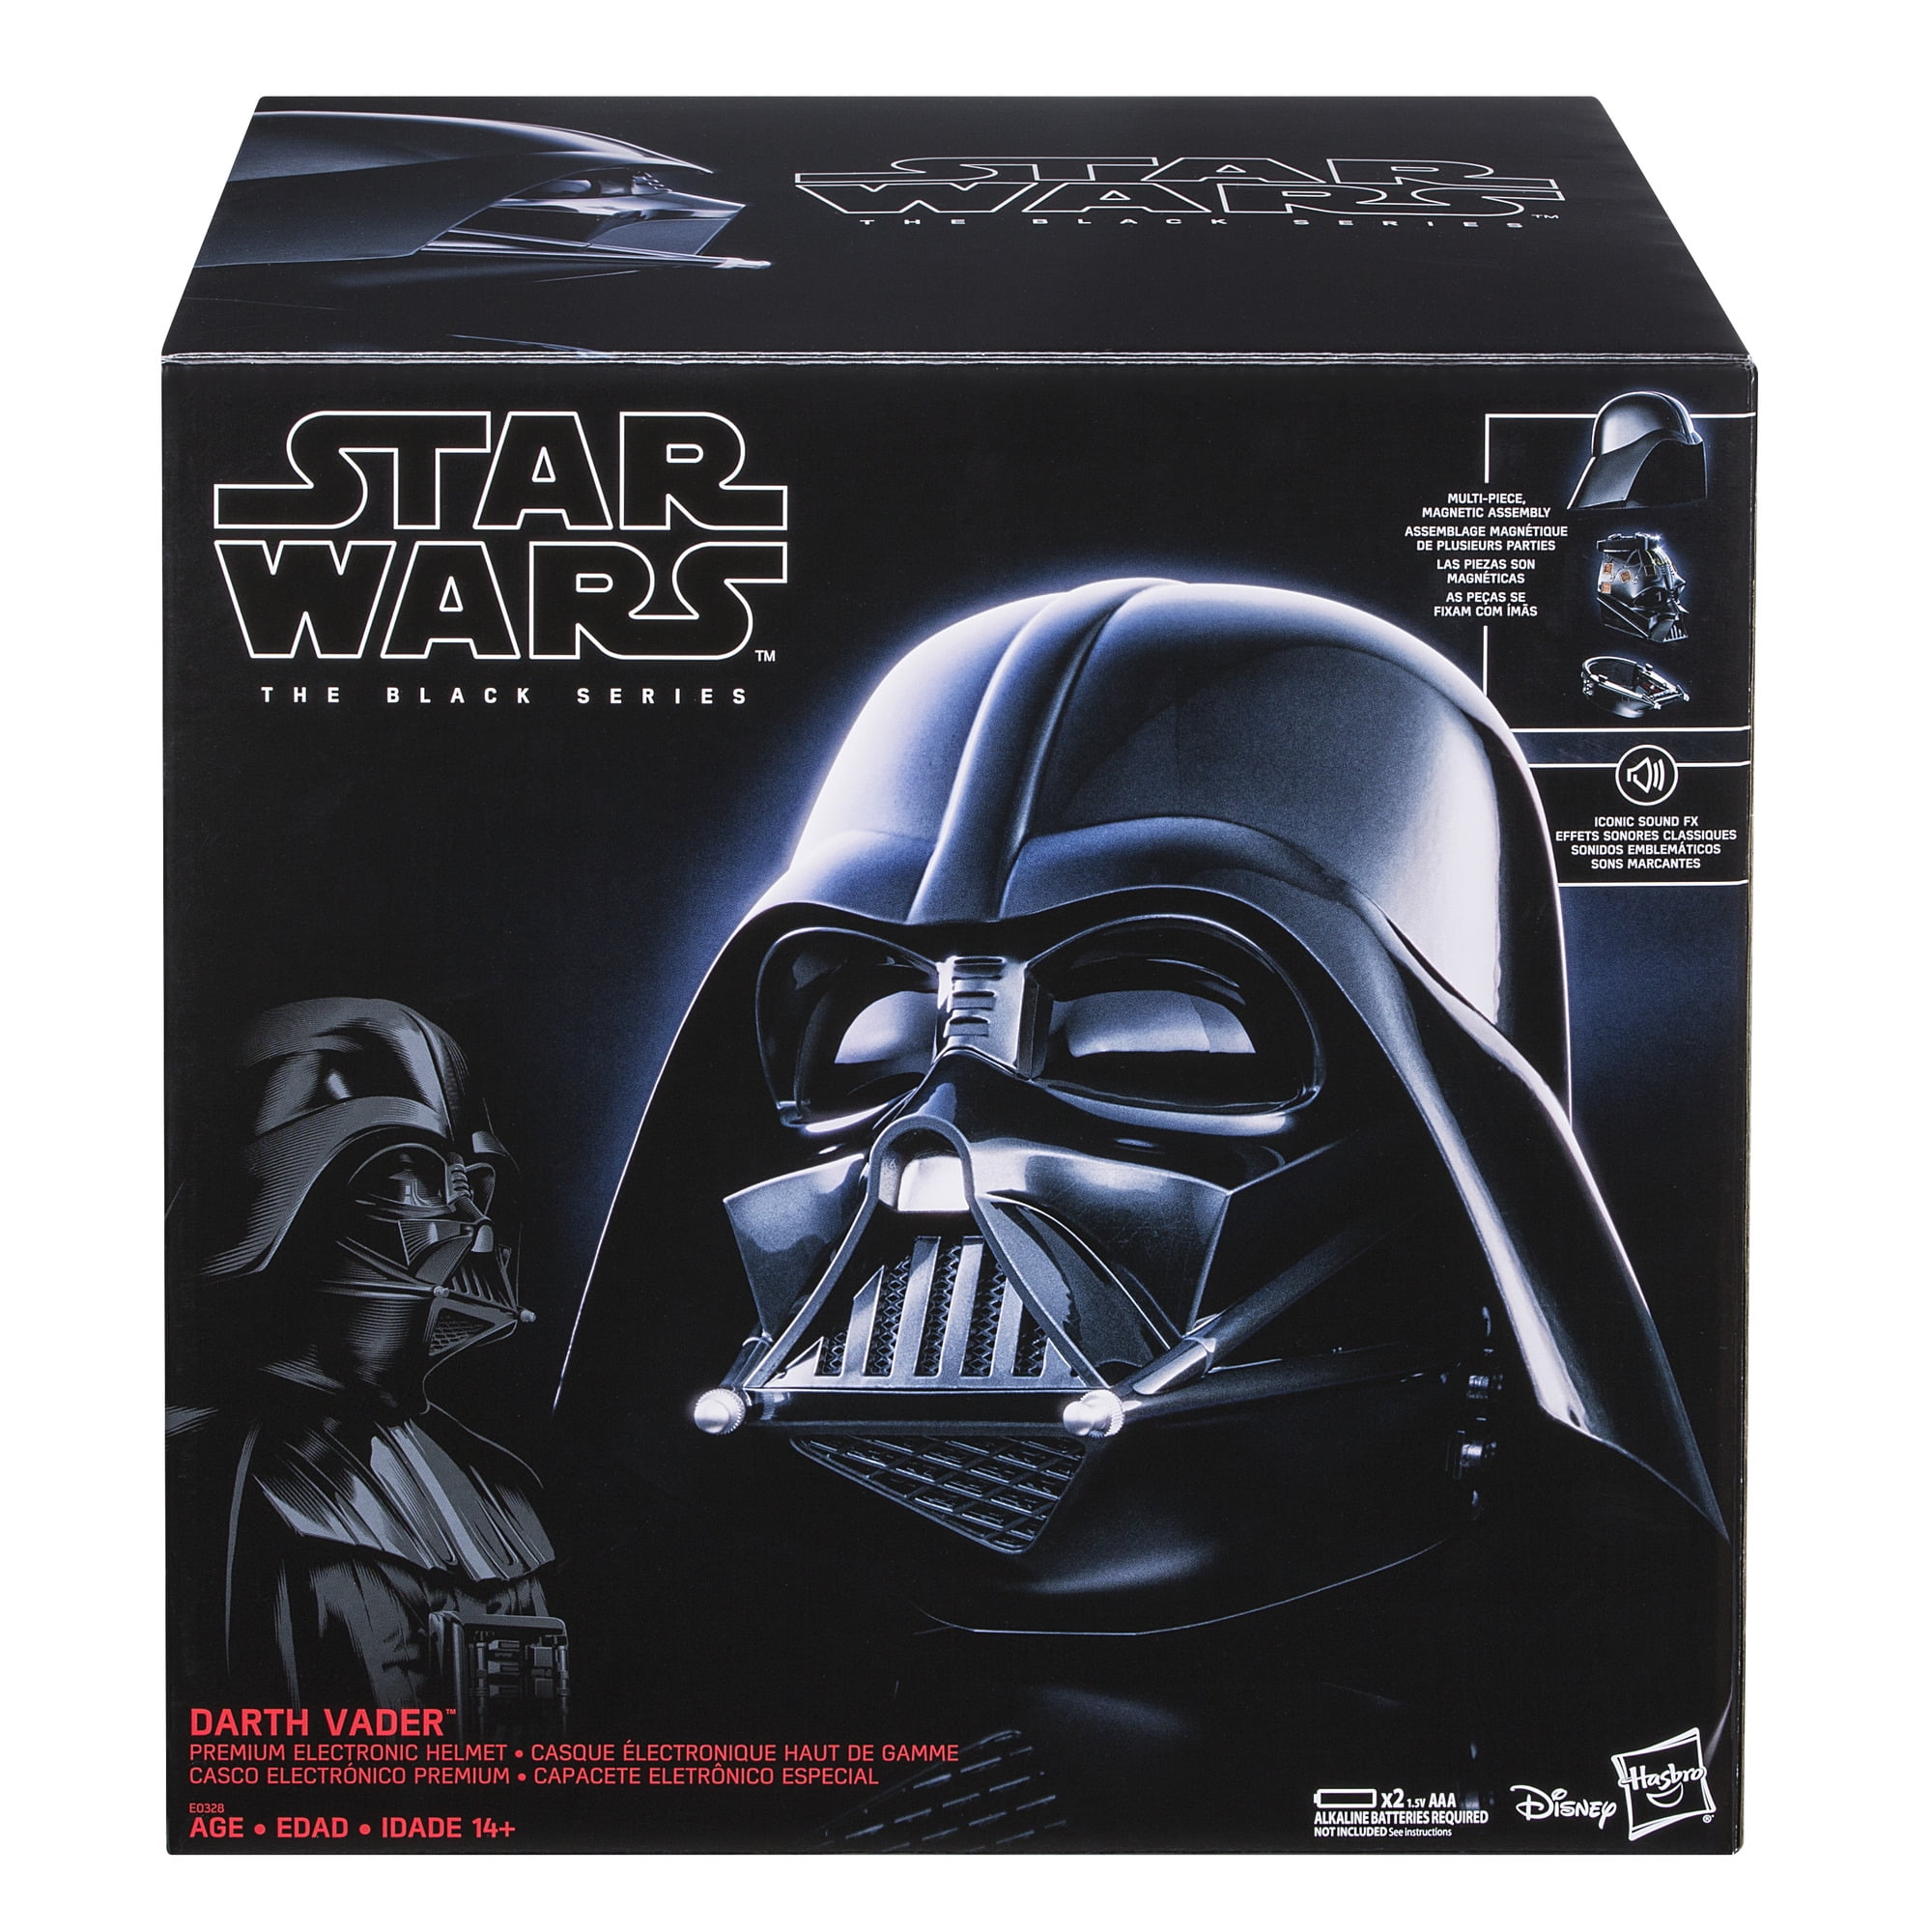 Star Wars The Black Series Darth Vader Capacete Eletrônico Premium Novo em folha Wow